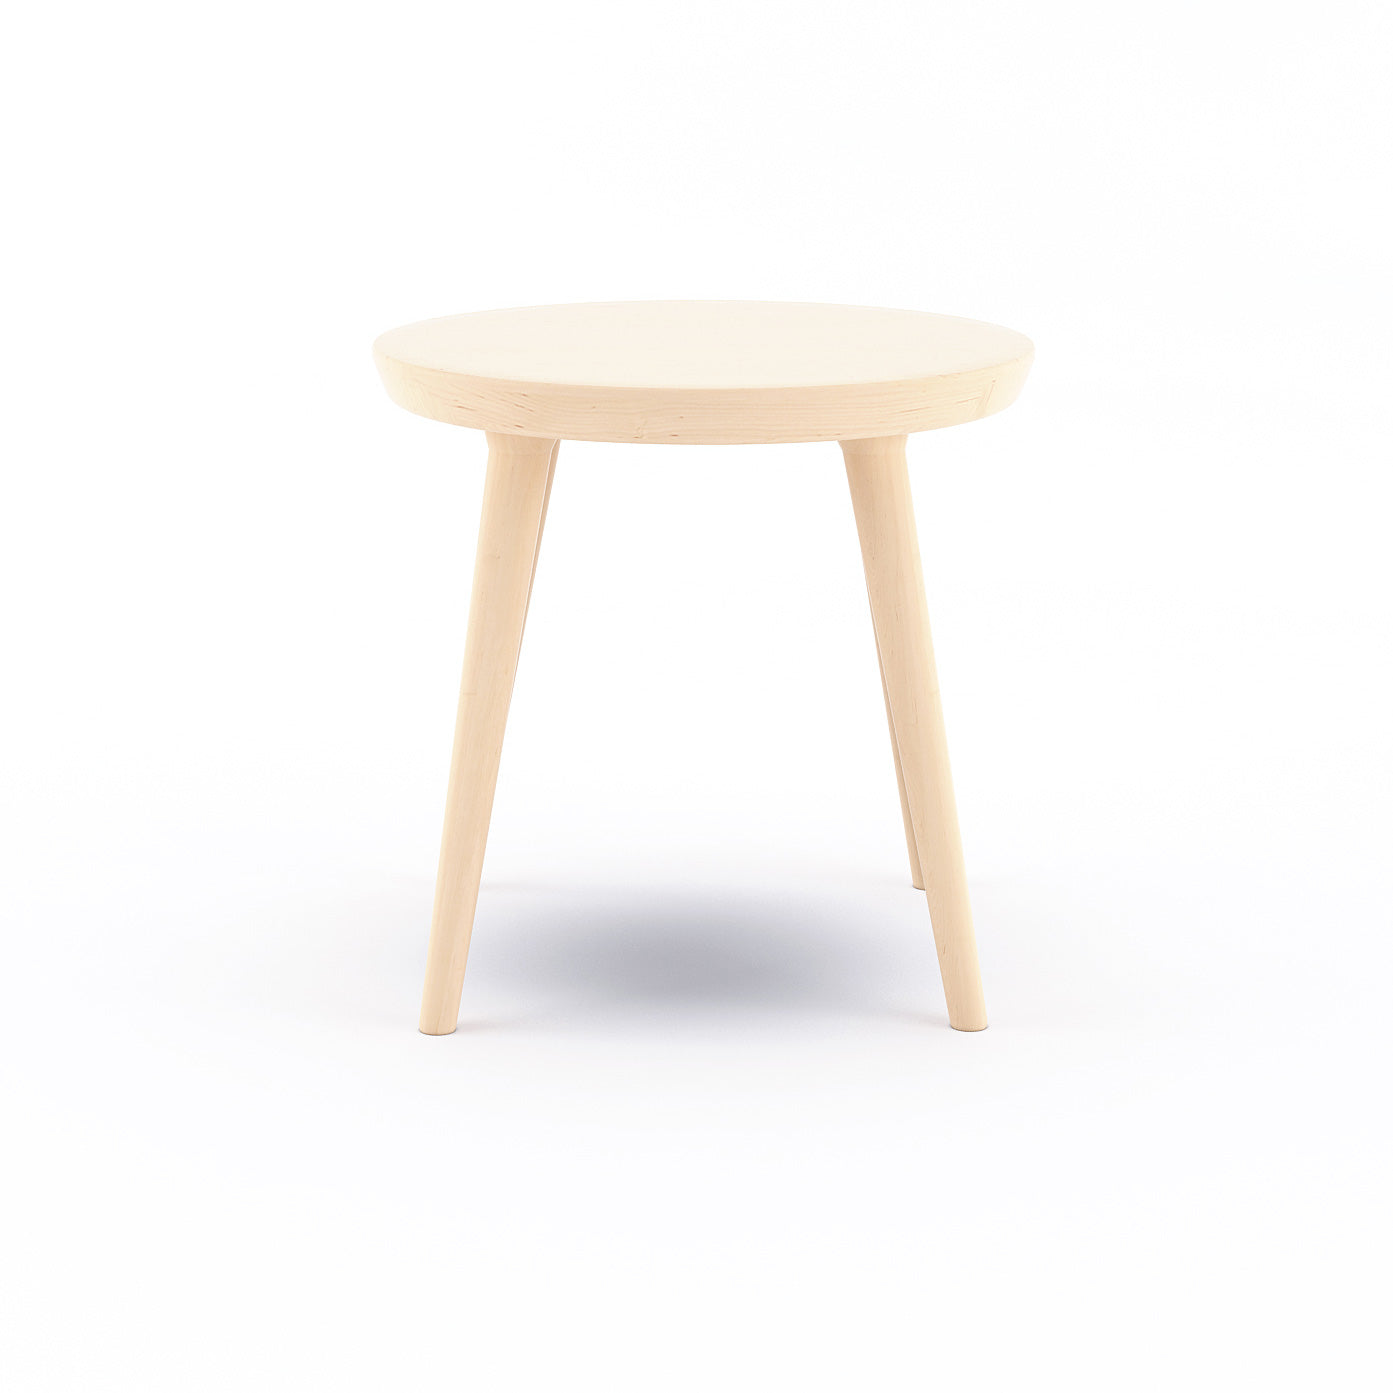 Voya Side Table in Maple from Side